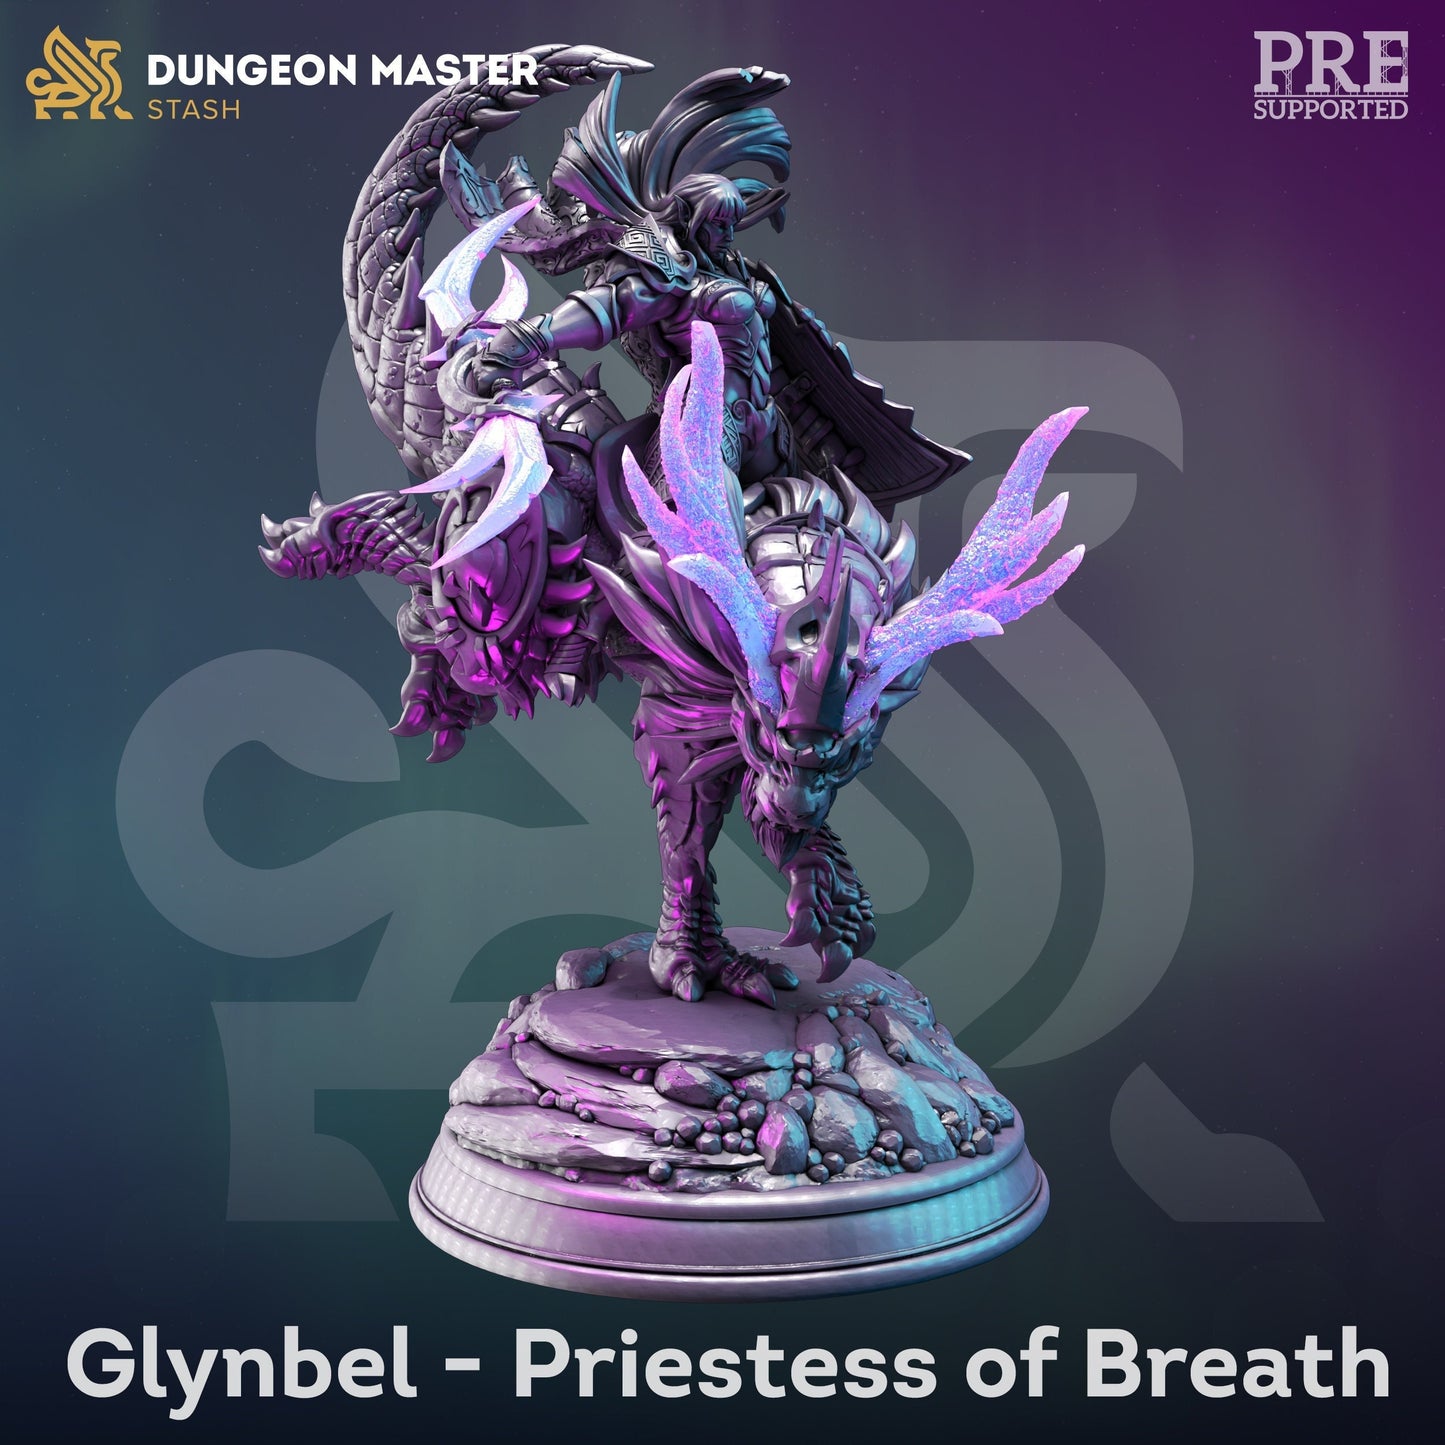 Glynbel, Priestess of Breath by DM Stash